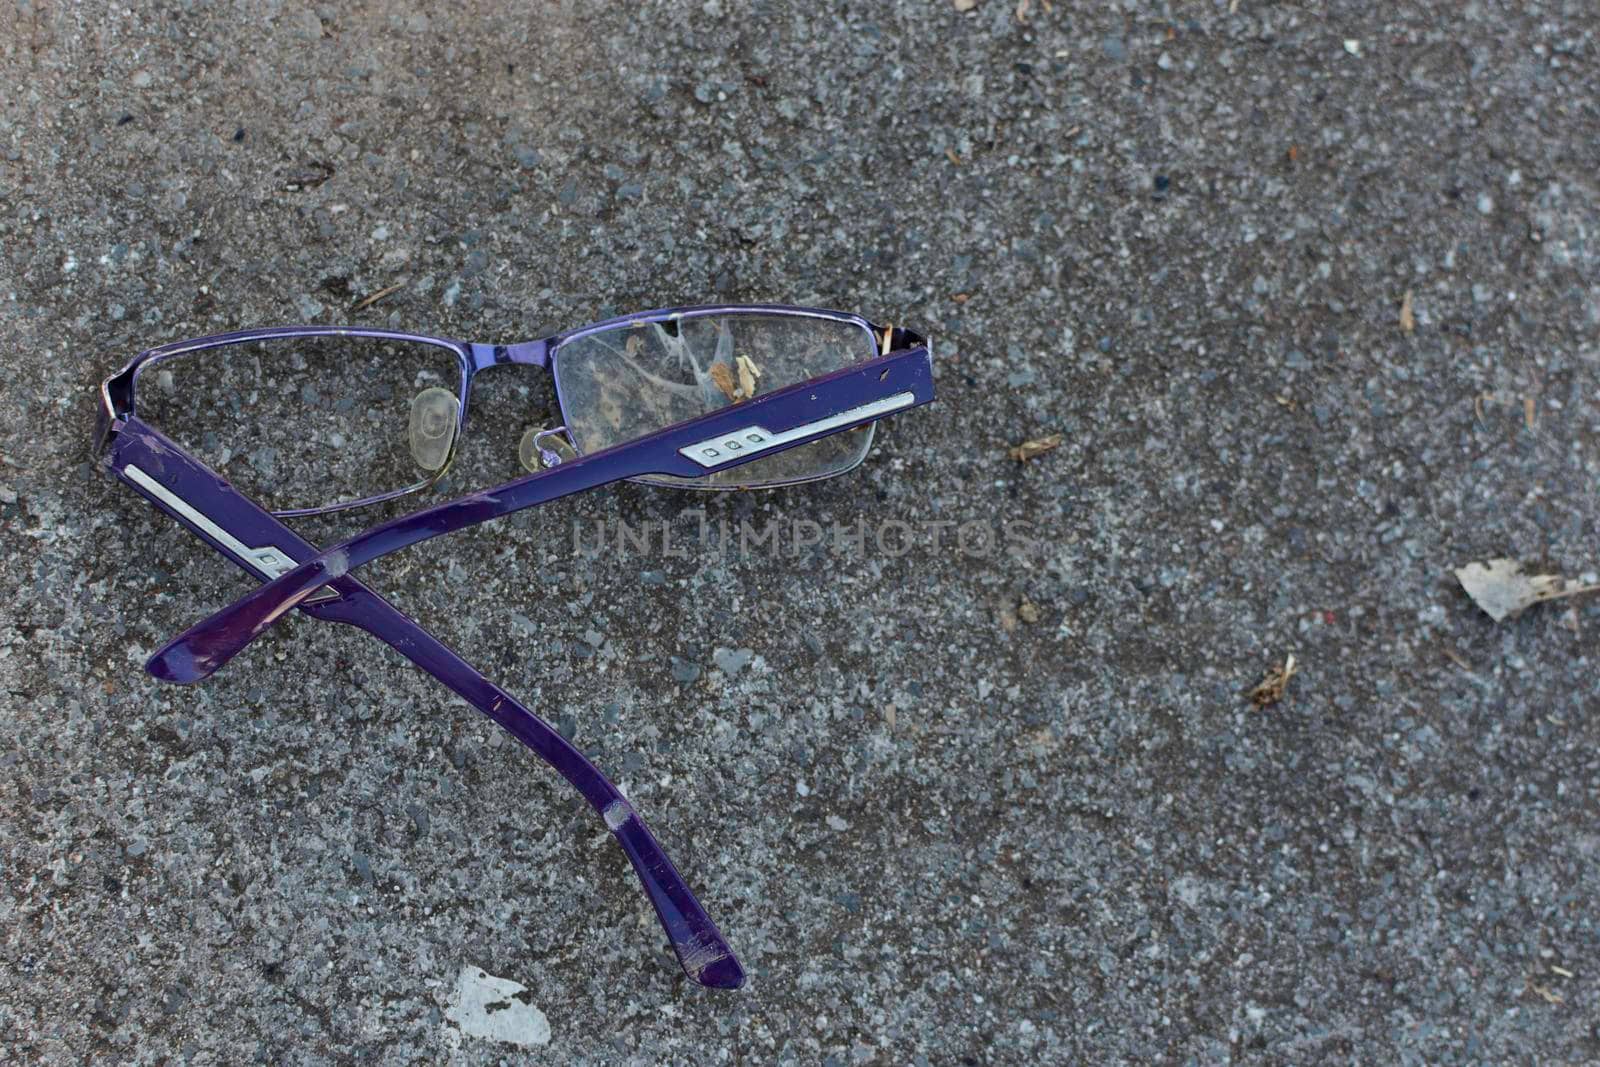 Old broken glasses were left along the footpath.